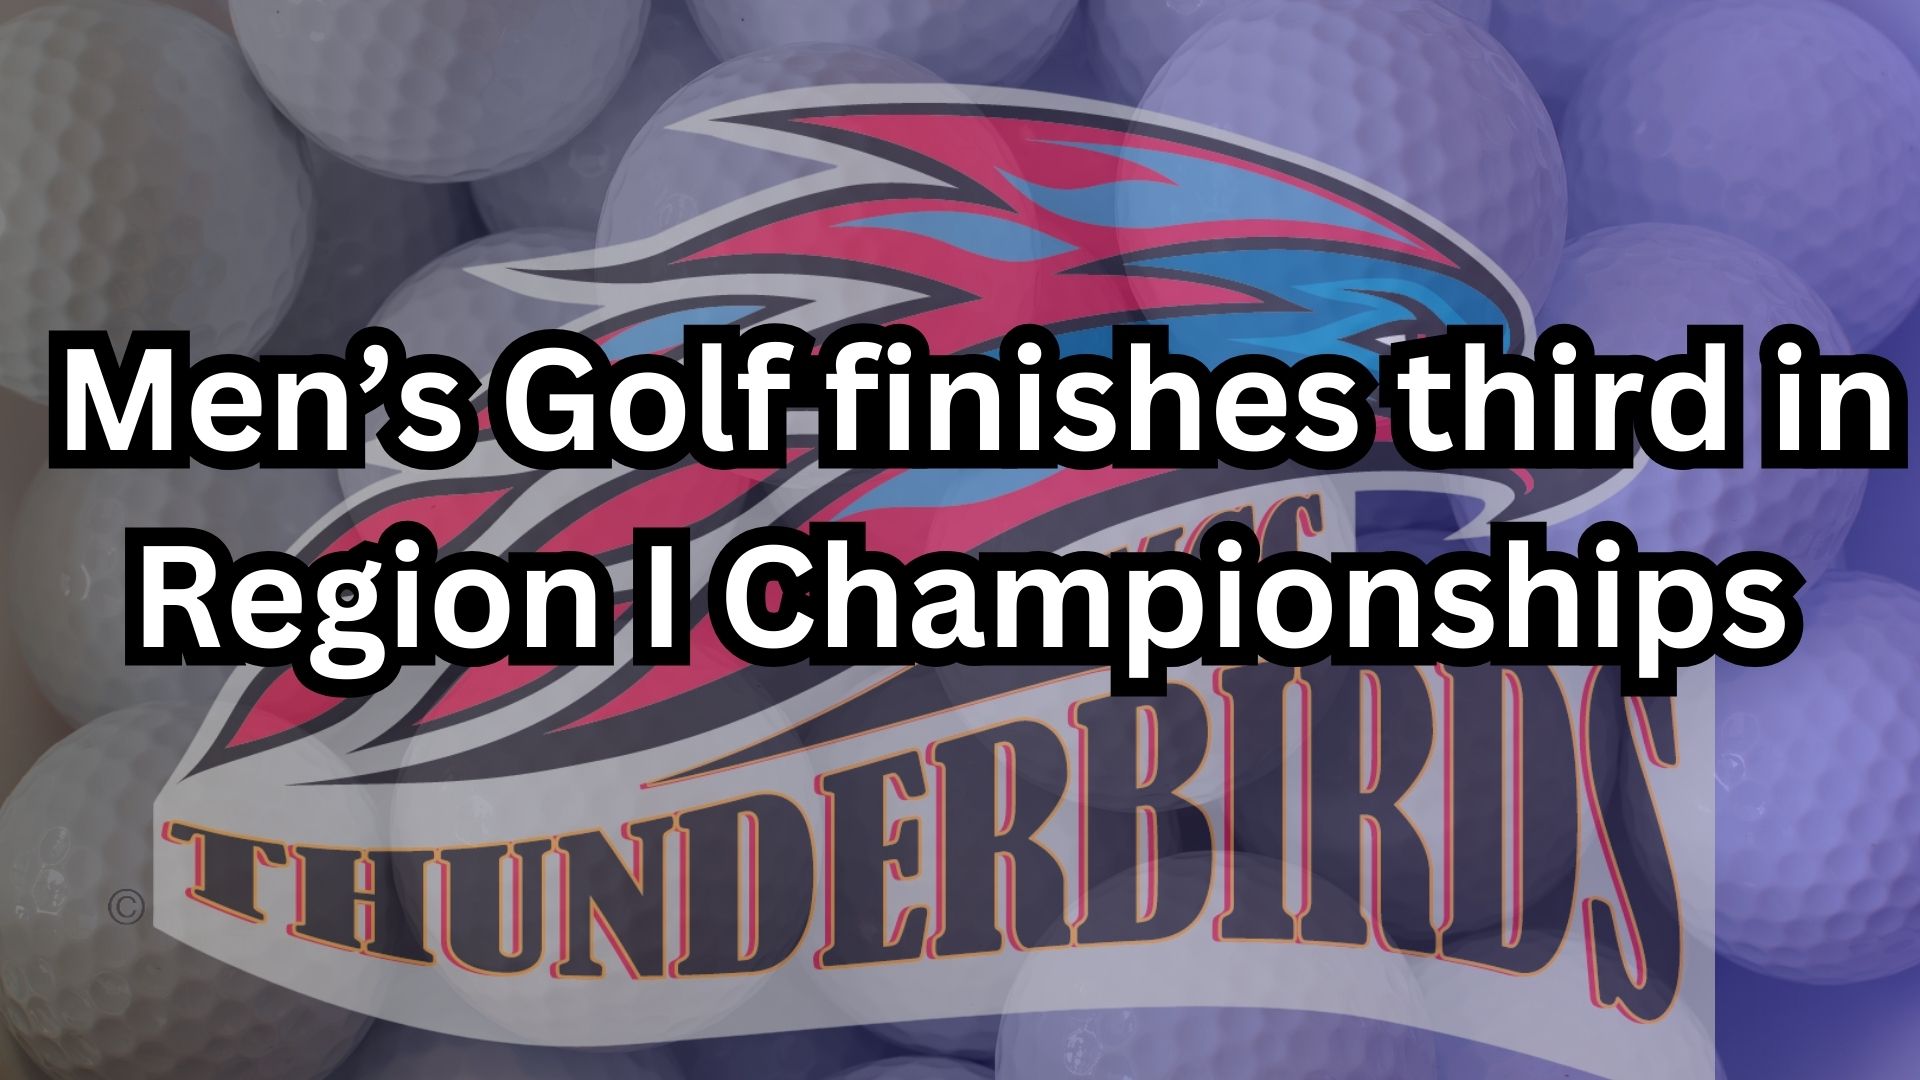 Men's Golf finishes third in Region I Championships